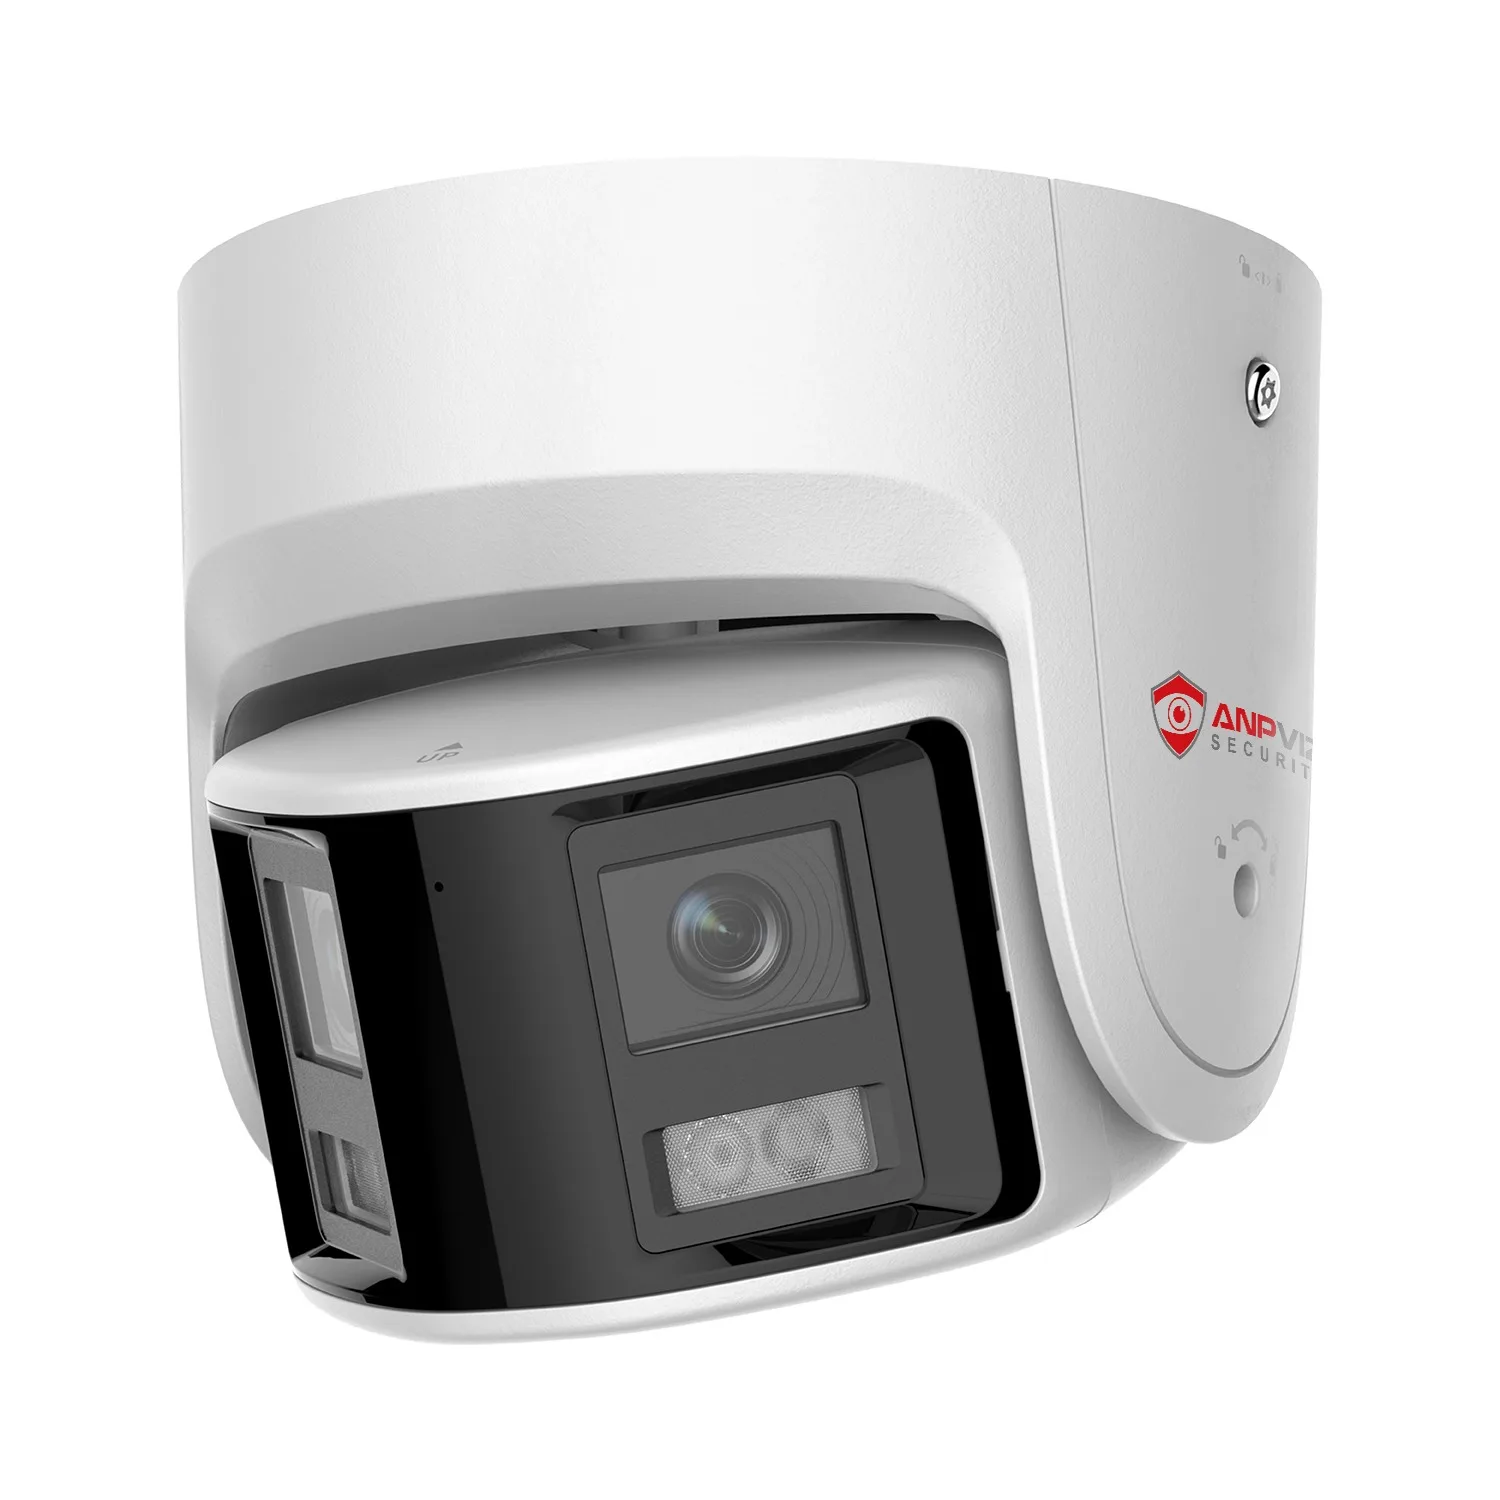 ANPVIZ POE IP Camera CCTV 6MP Dual Lens Panoramic Camera 180 degree image Human/Vehicle Detection Sound & flash alarm 2-way talk